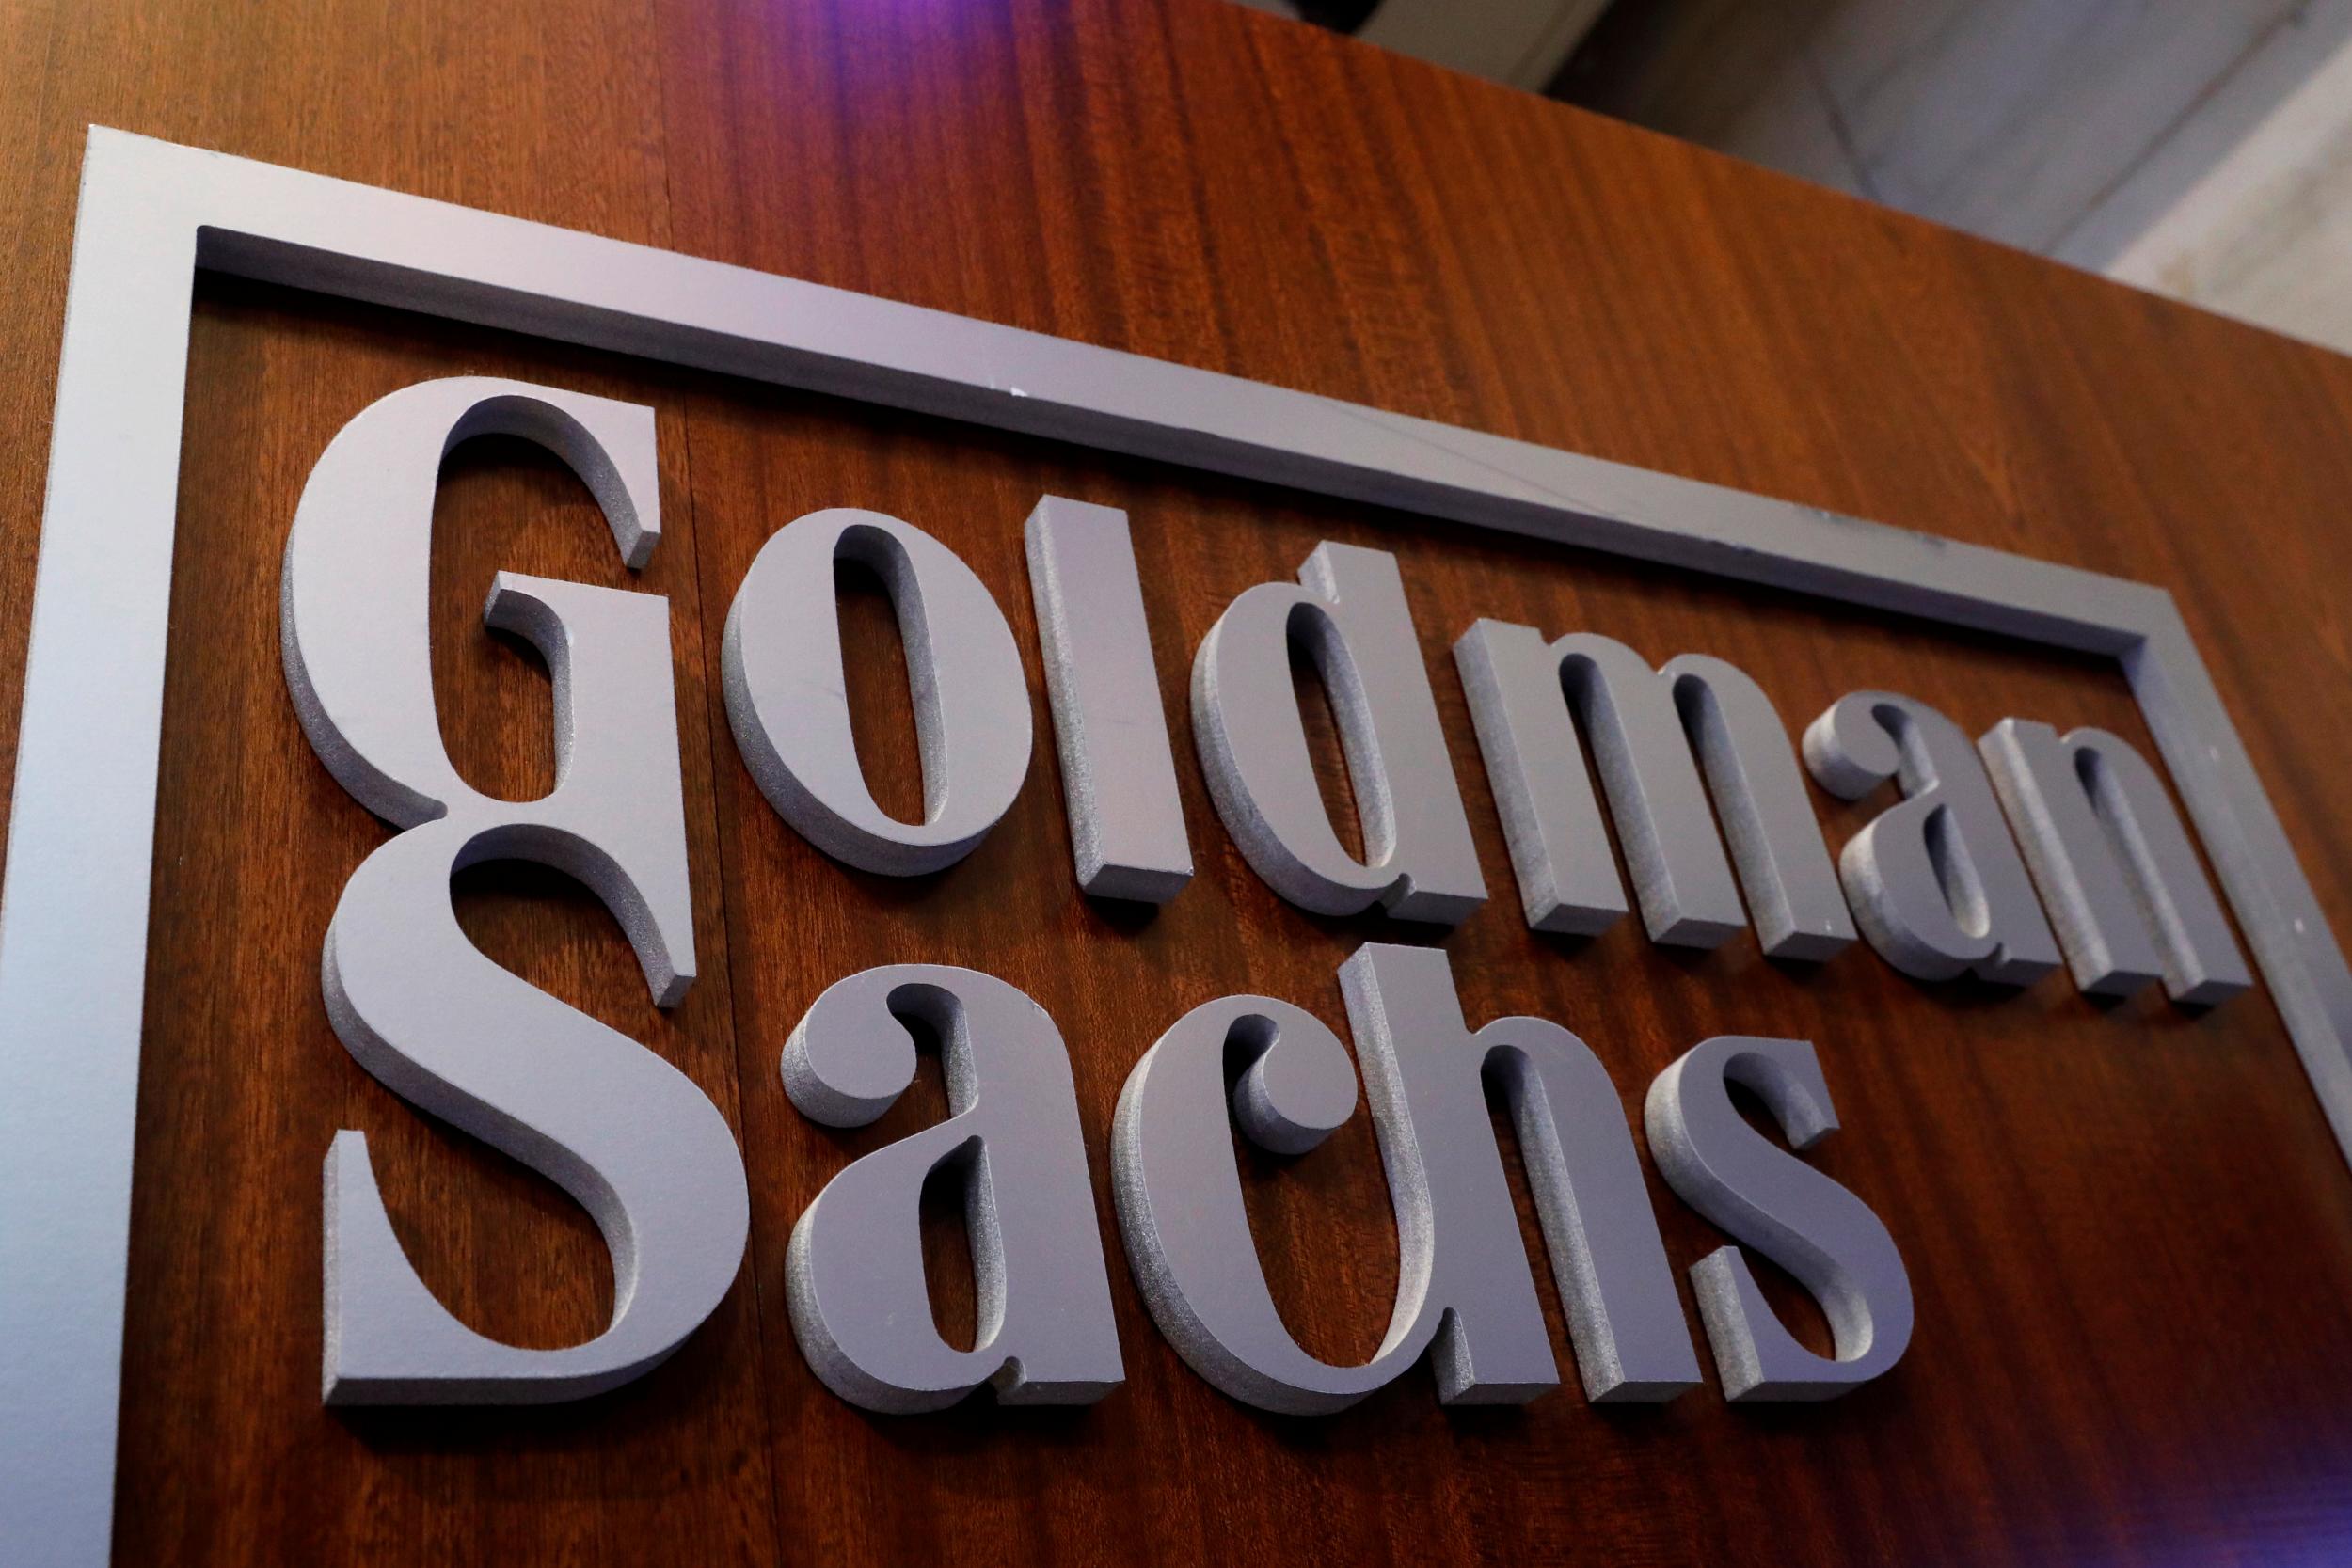 Frankfurt looks set to welcome a larger Goldman Sachs presence